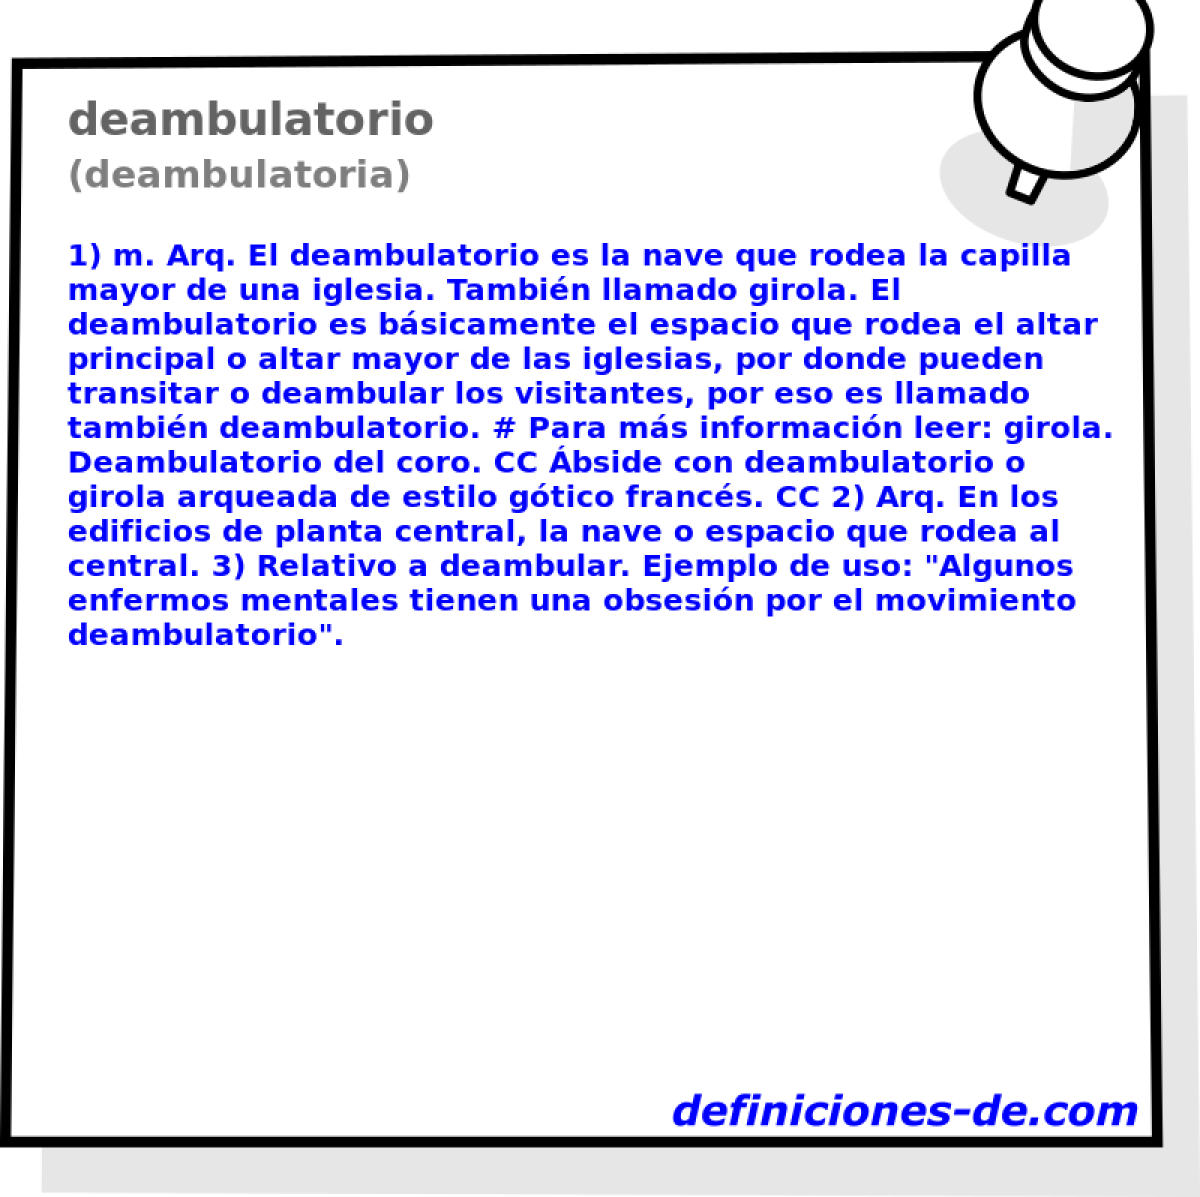 deambulatorio (deambulatoria)